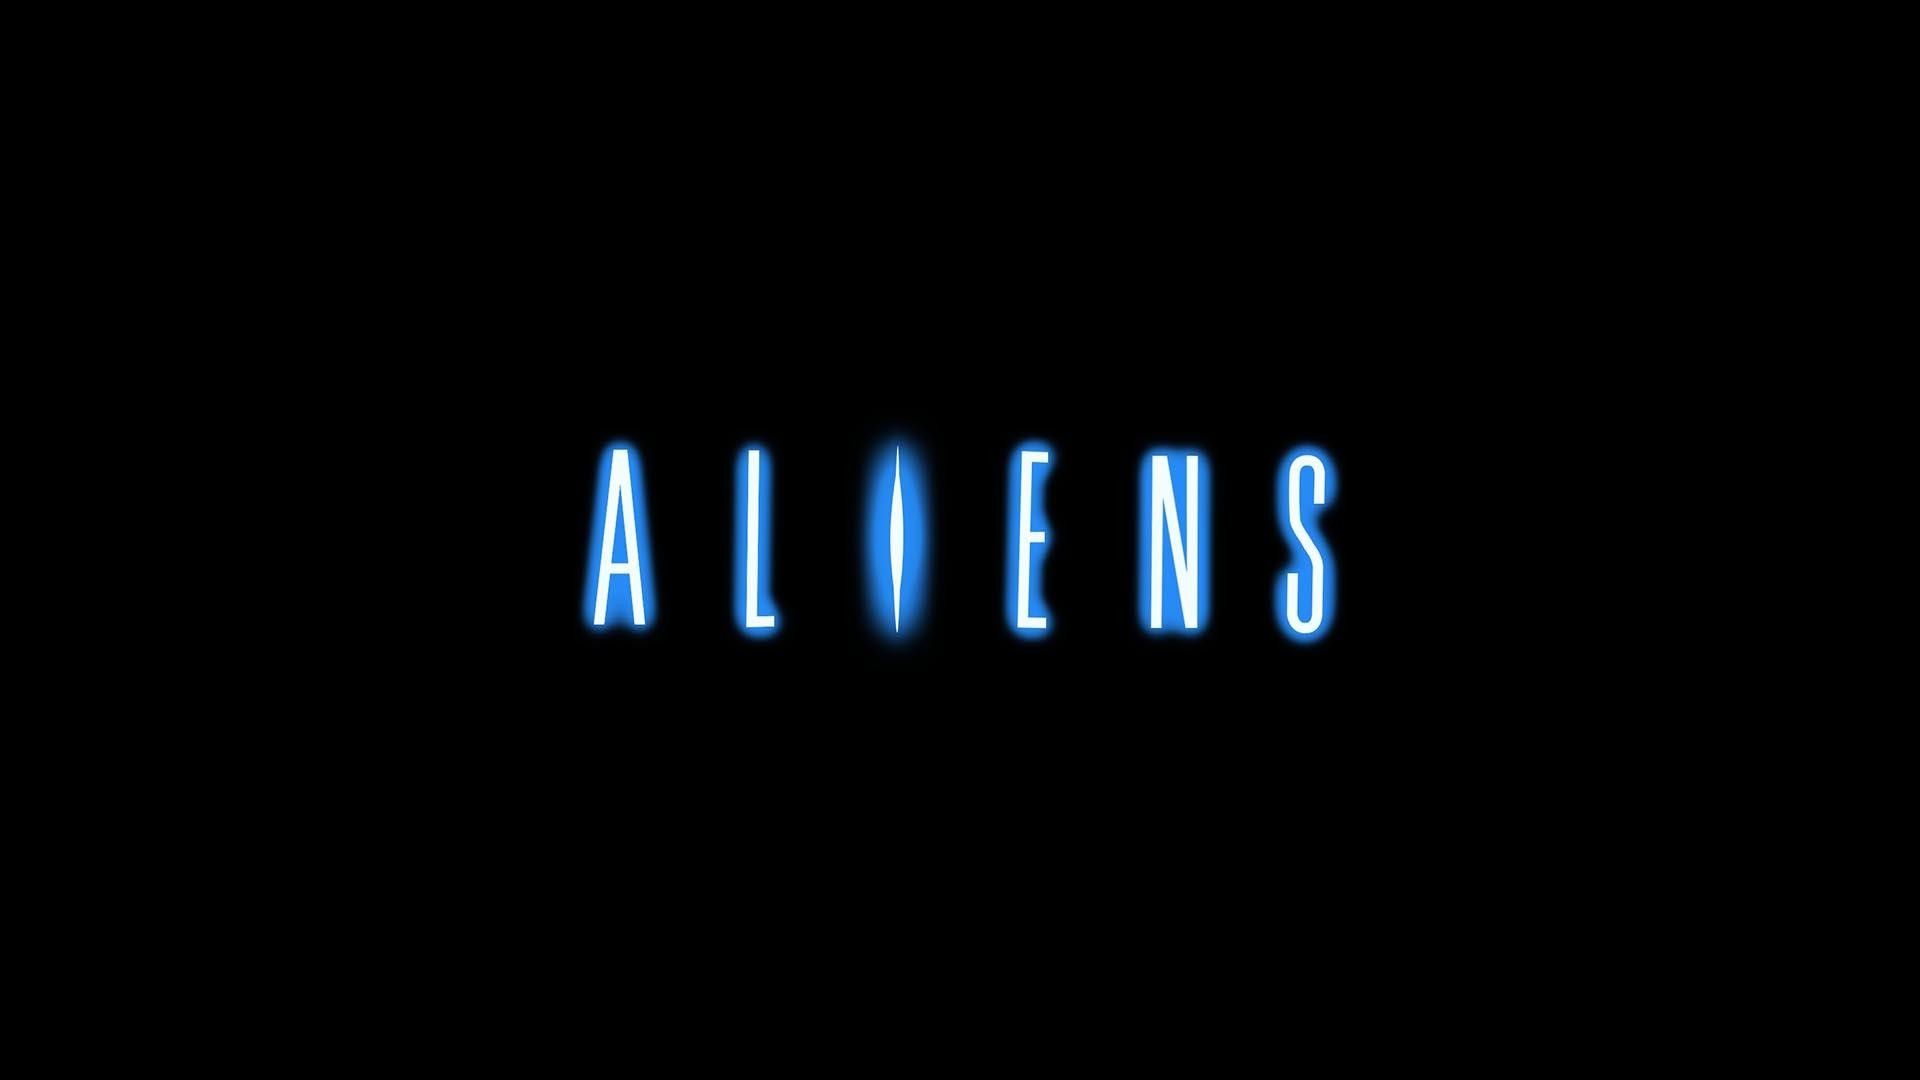 Aliens wallpaper · ① Descargue fondos de pantalla Full HD gratuitos para escritorio